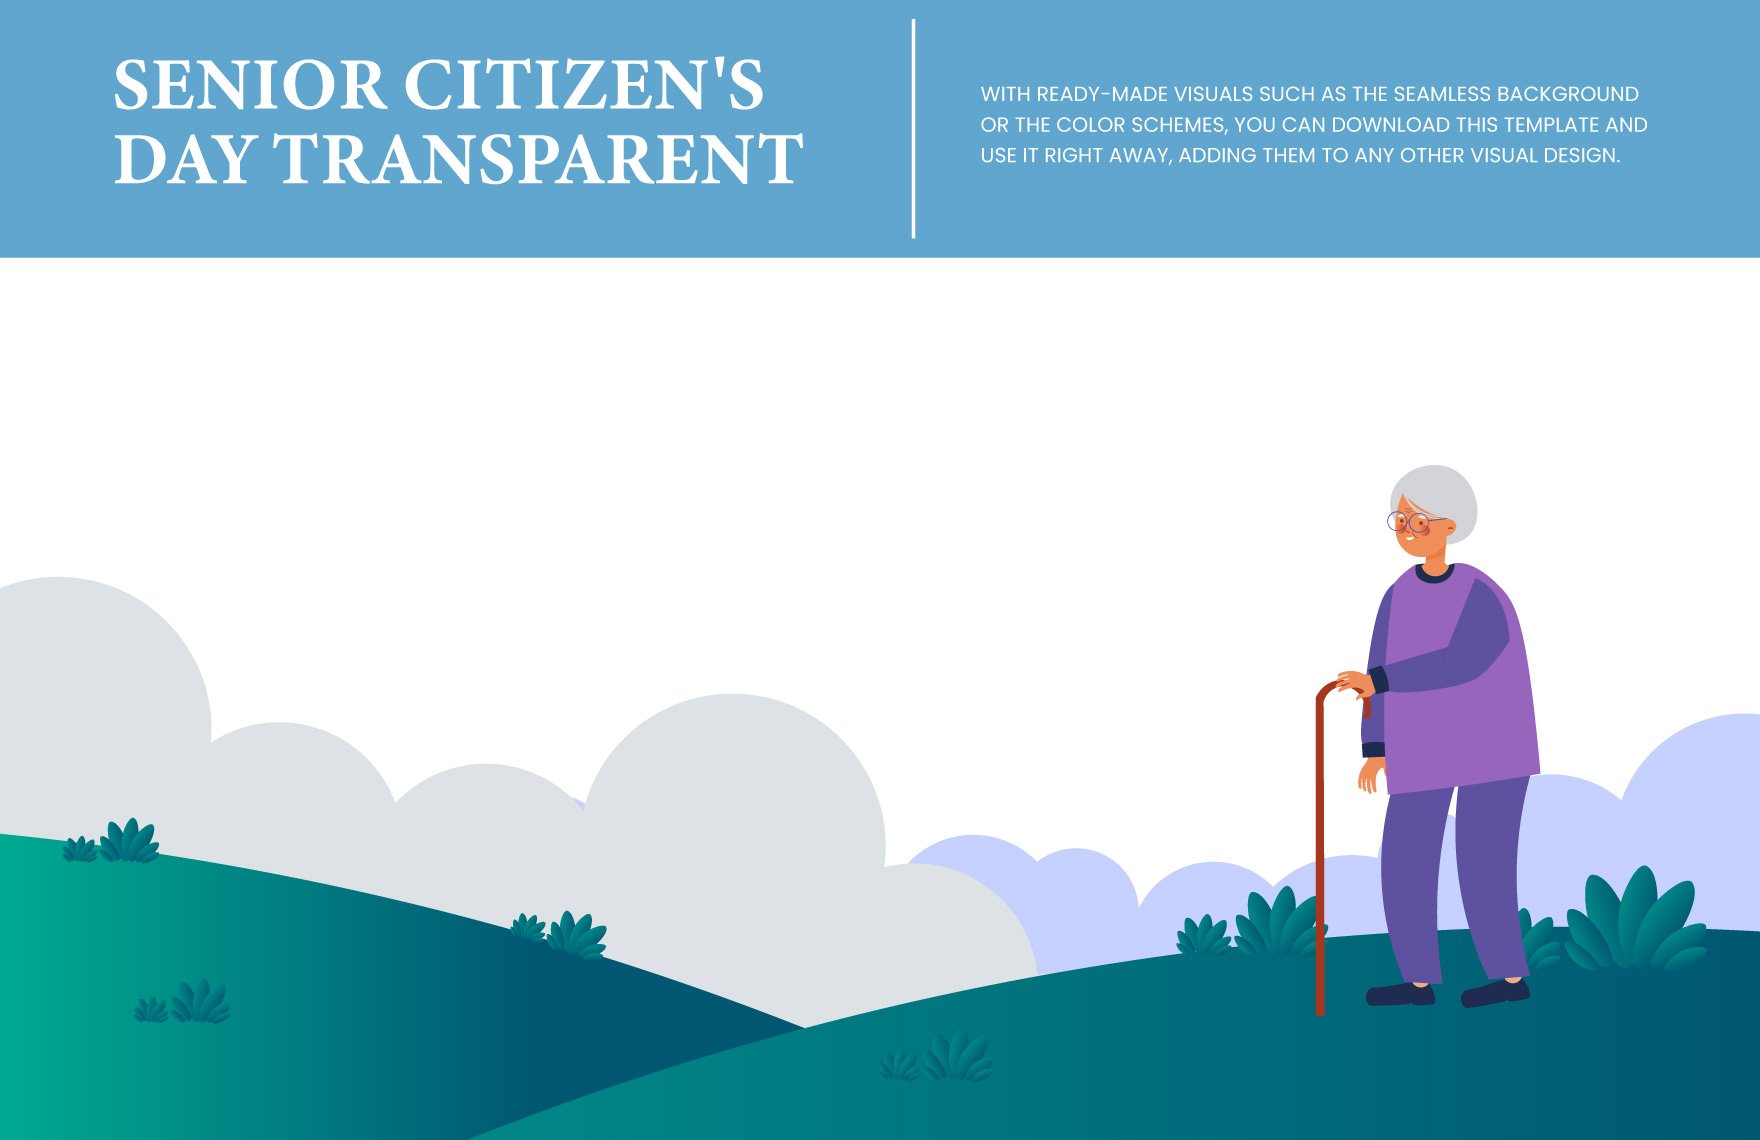 Senior Citizens Day Transparent in PDF, Illustrator, SVG, JPG